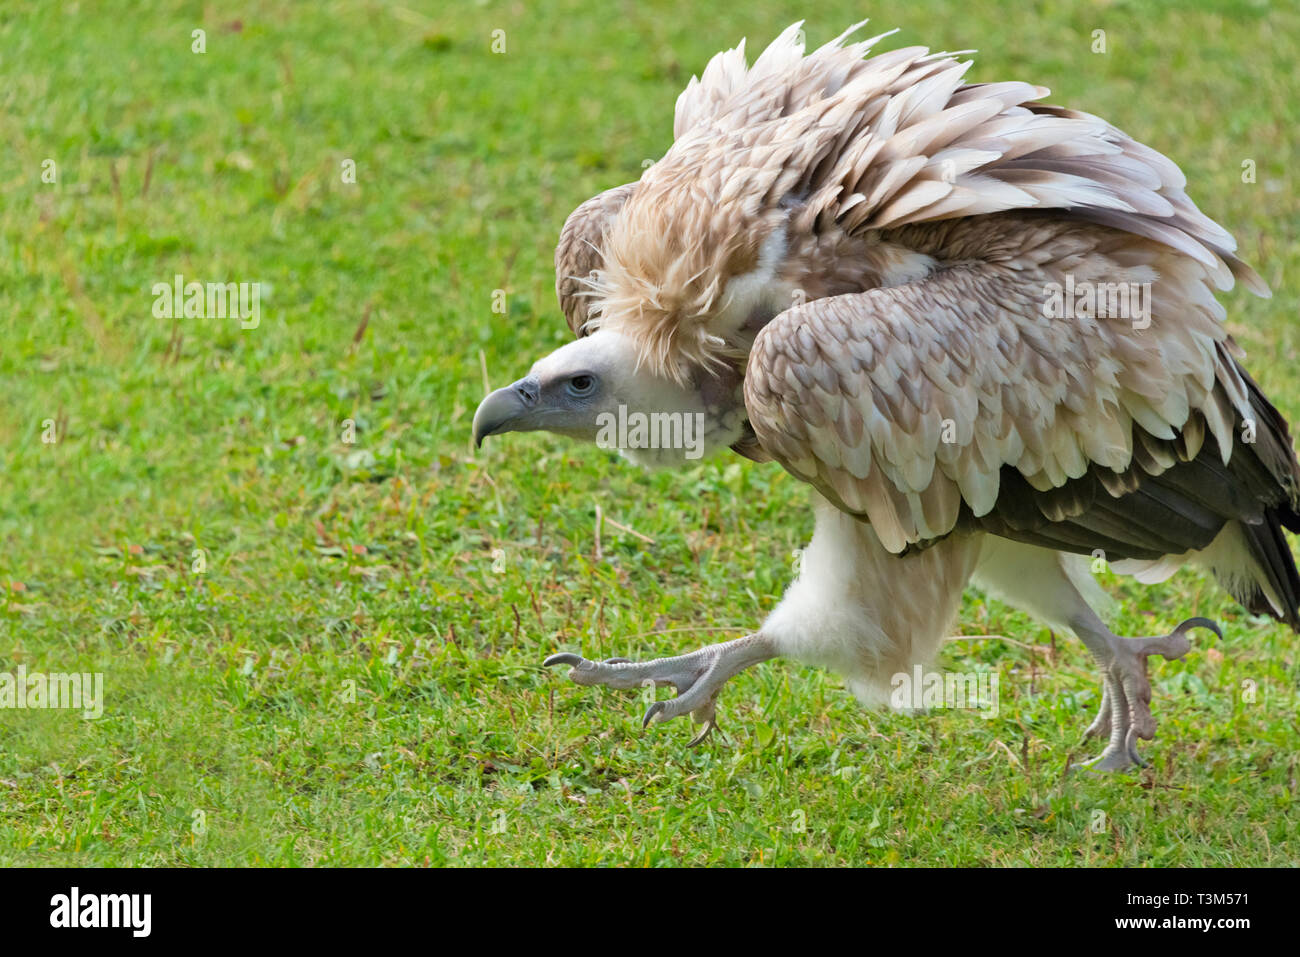 Golden Eagle in Trans-Ili montagne Alatau, Kazakistan Foto Stock